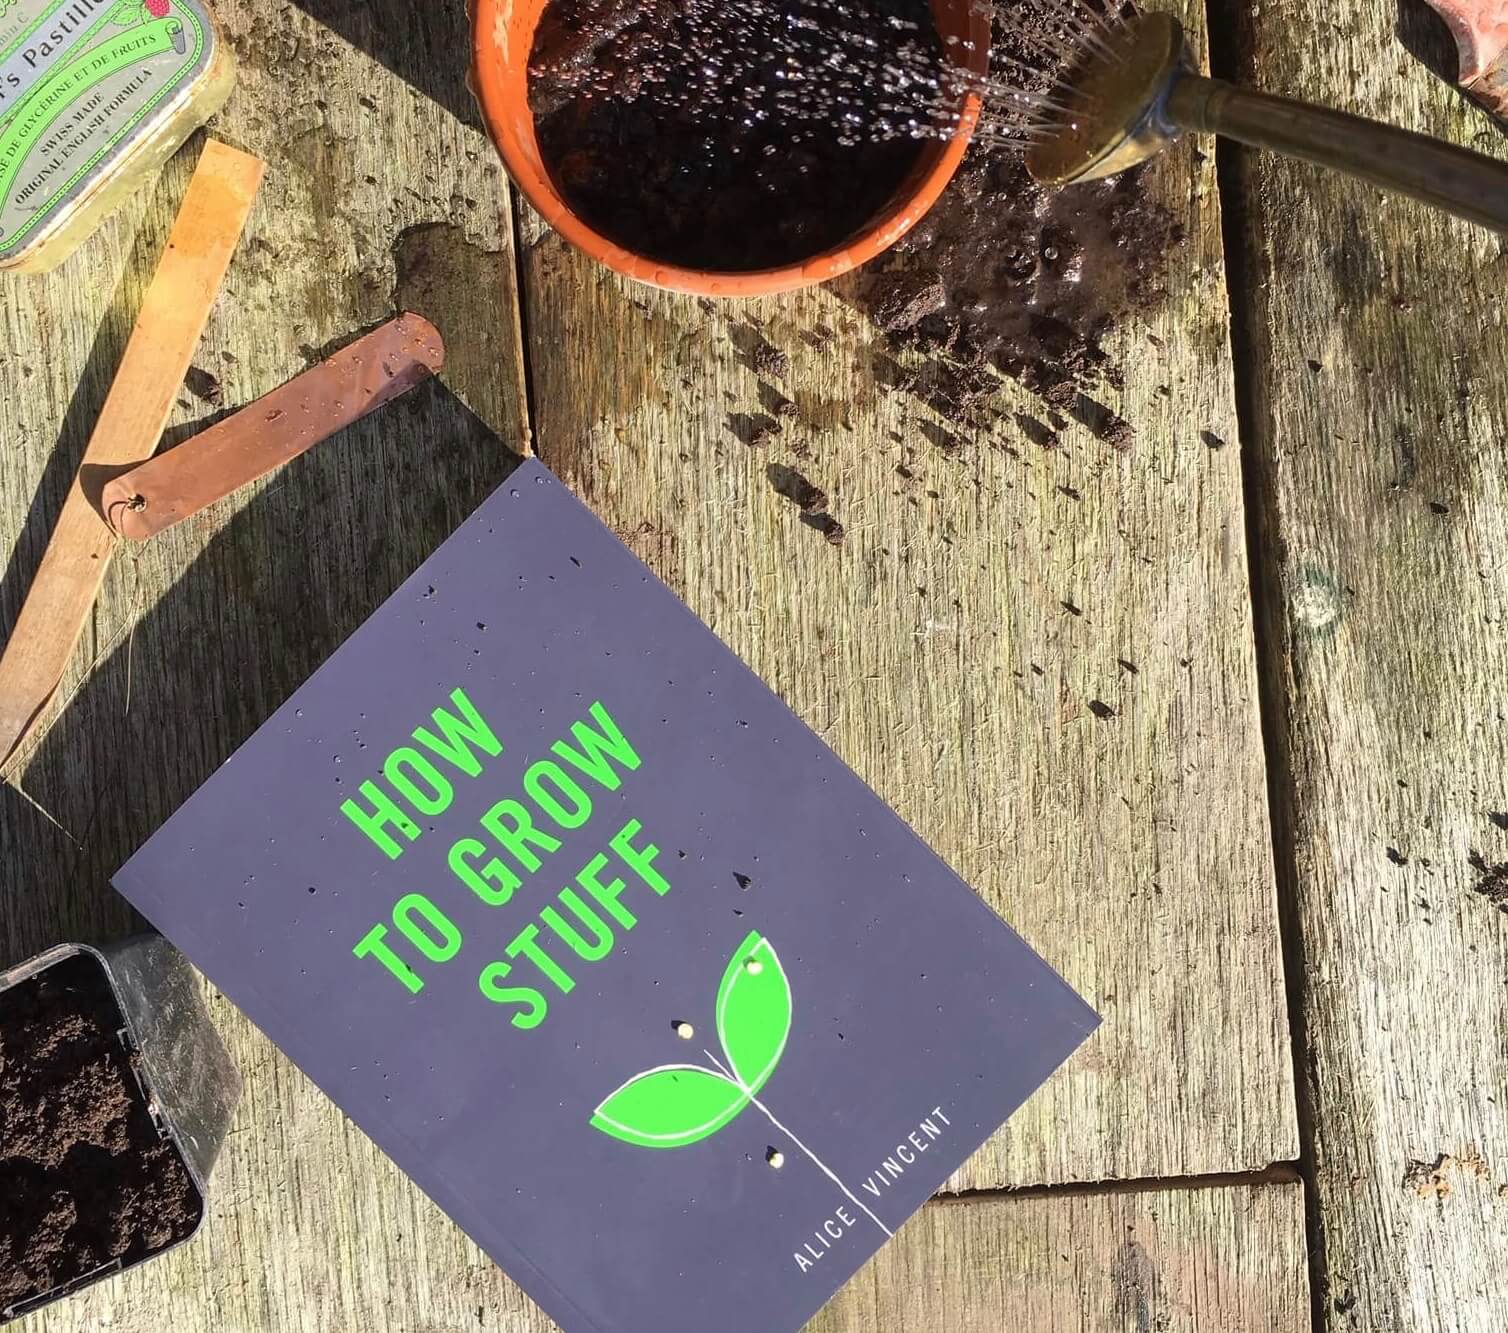 gardening book